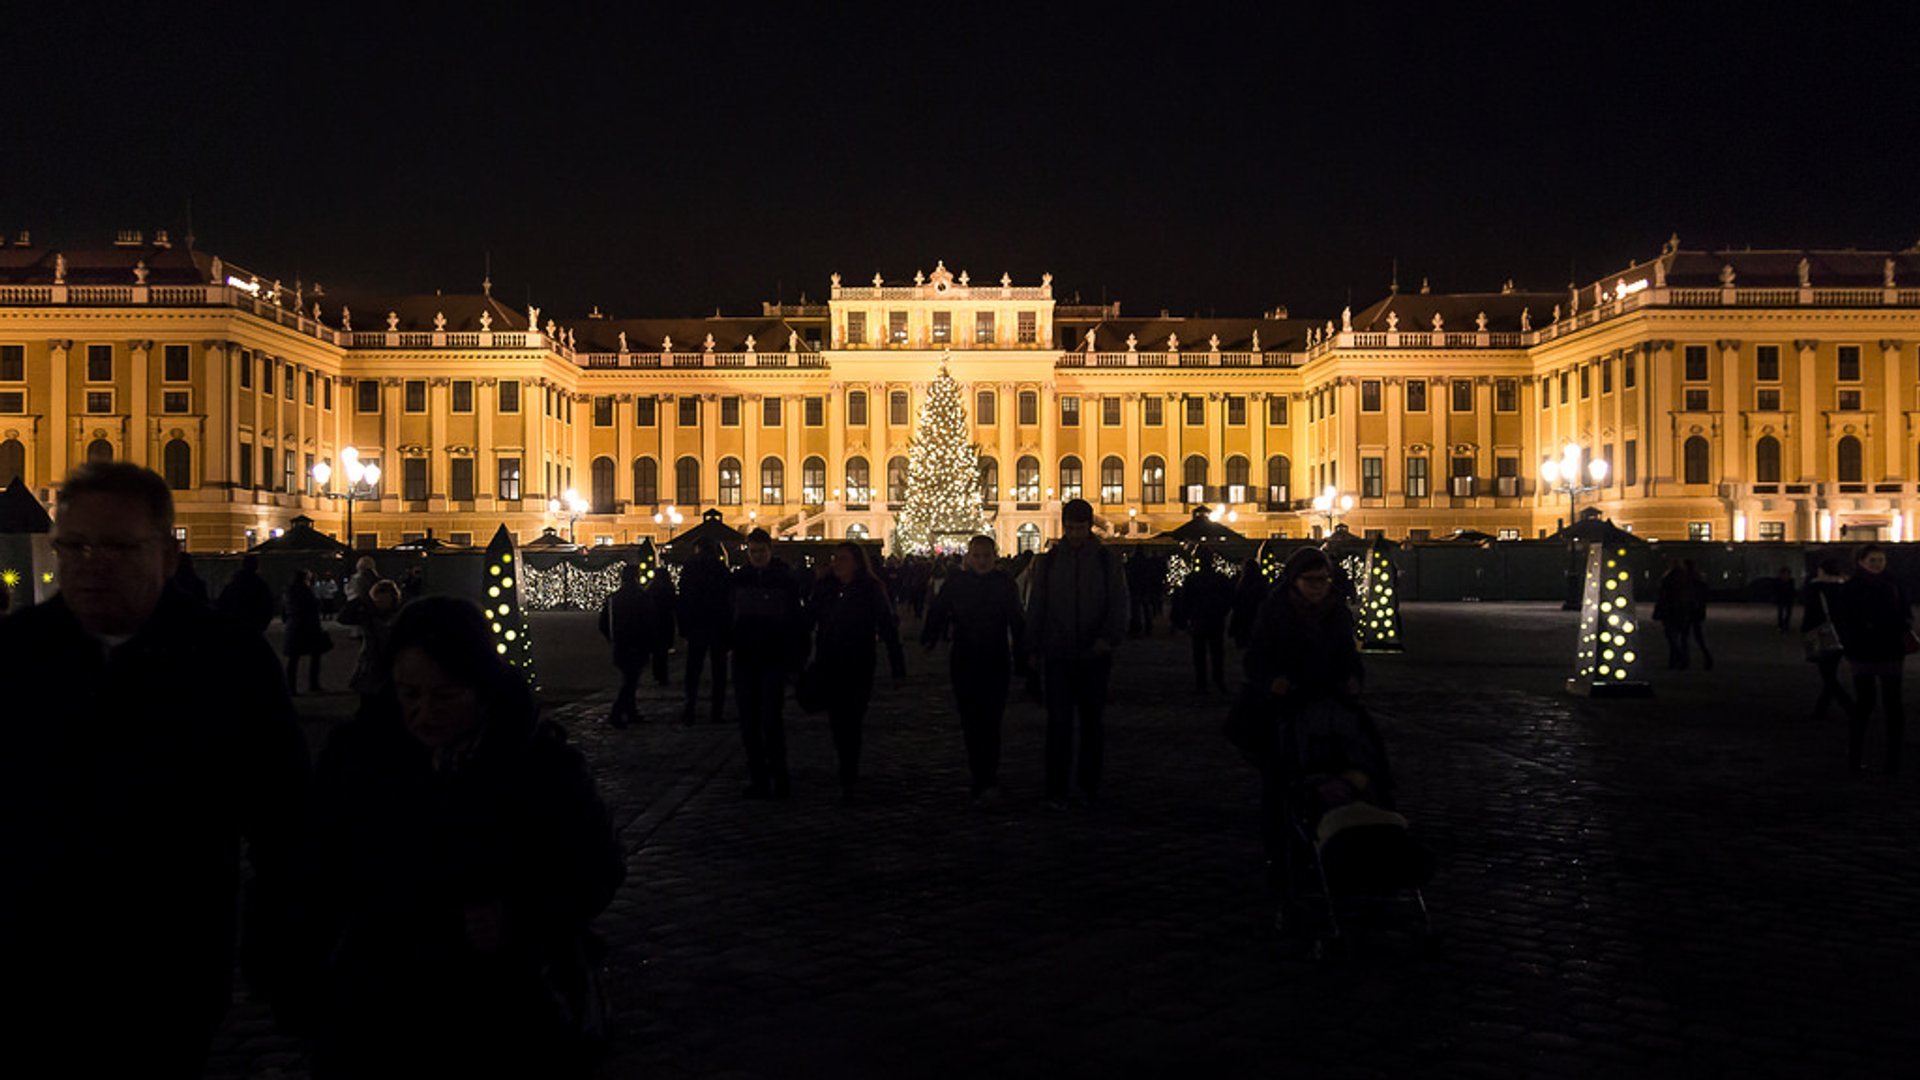 Louis Vuitton Christmas windows 2014, Vienna – Austria